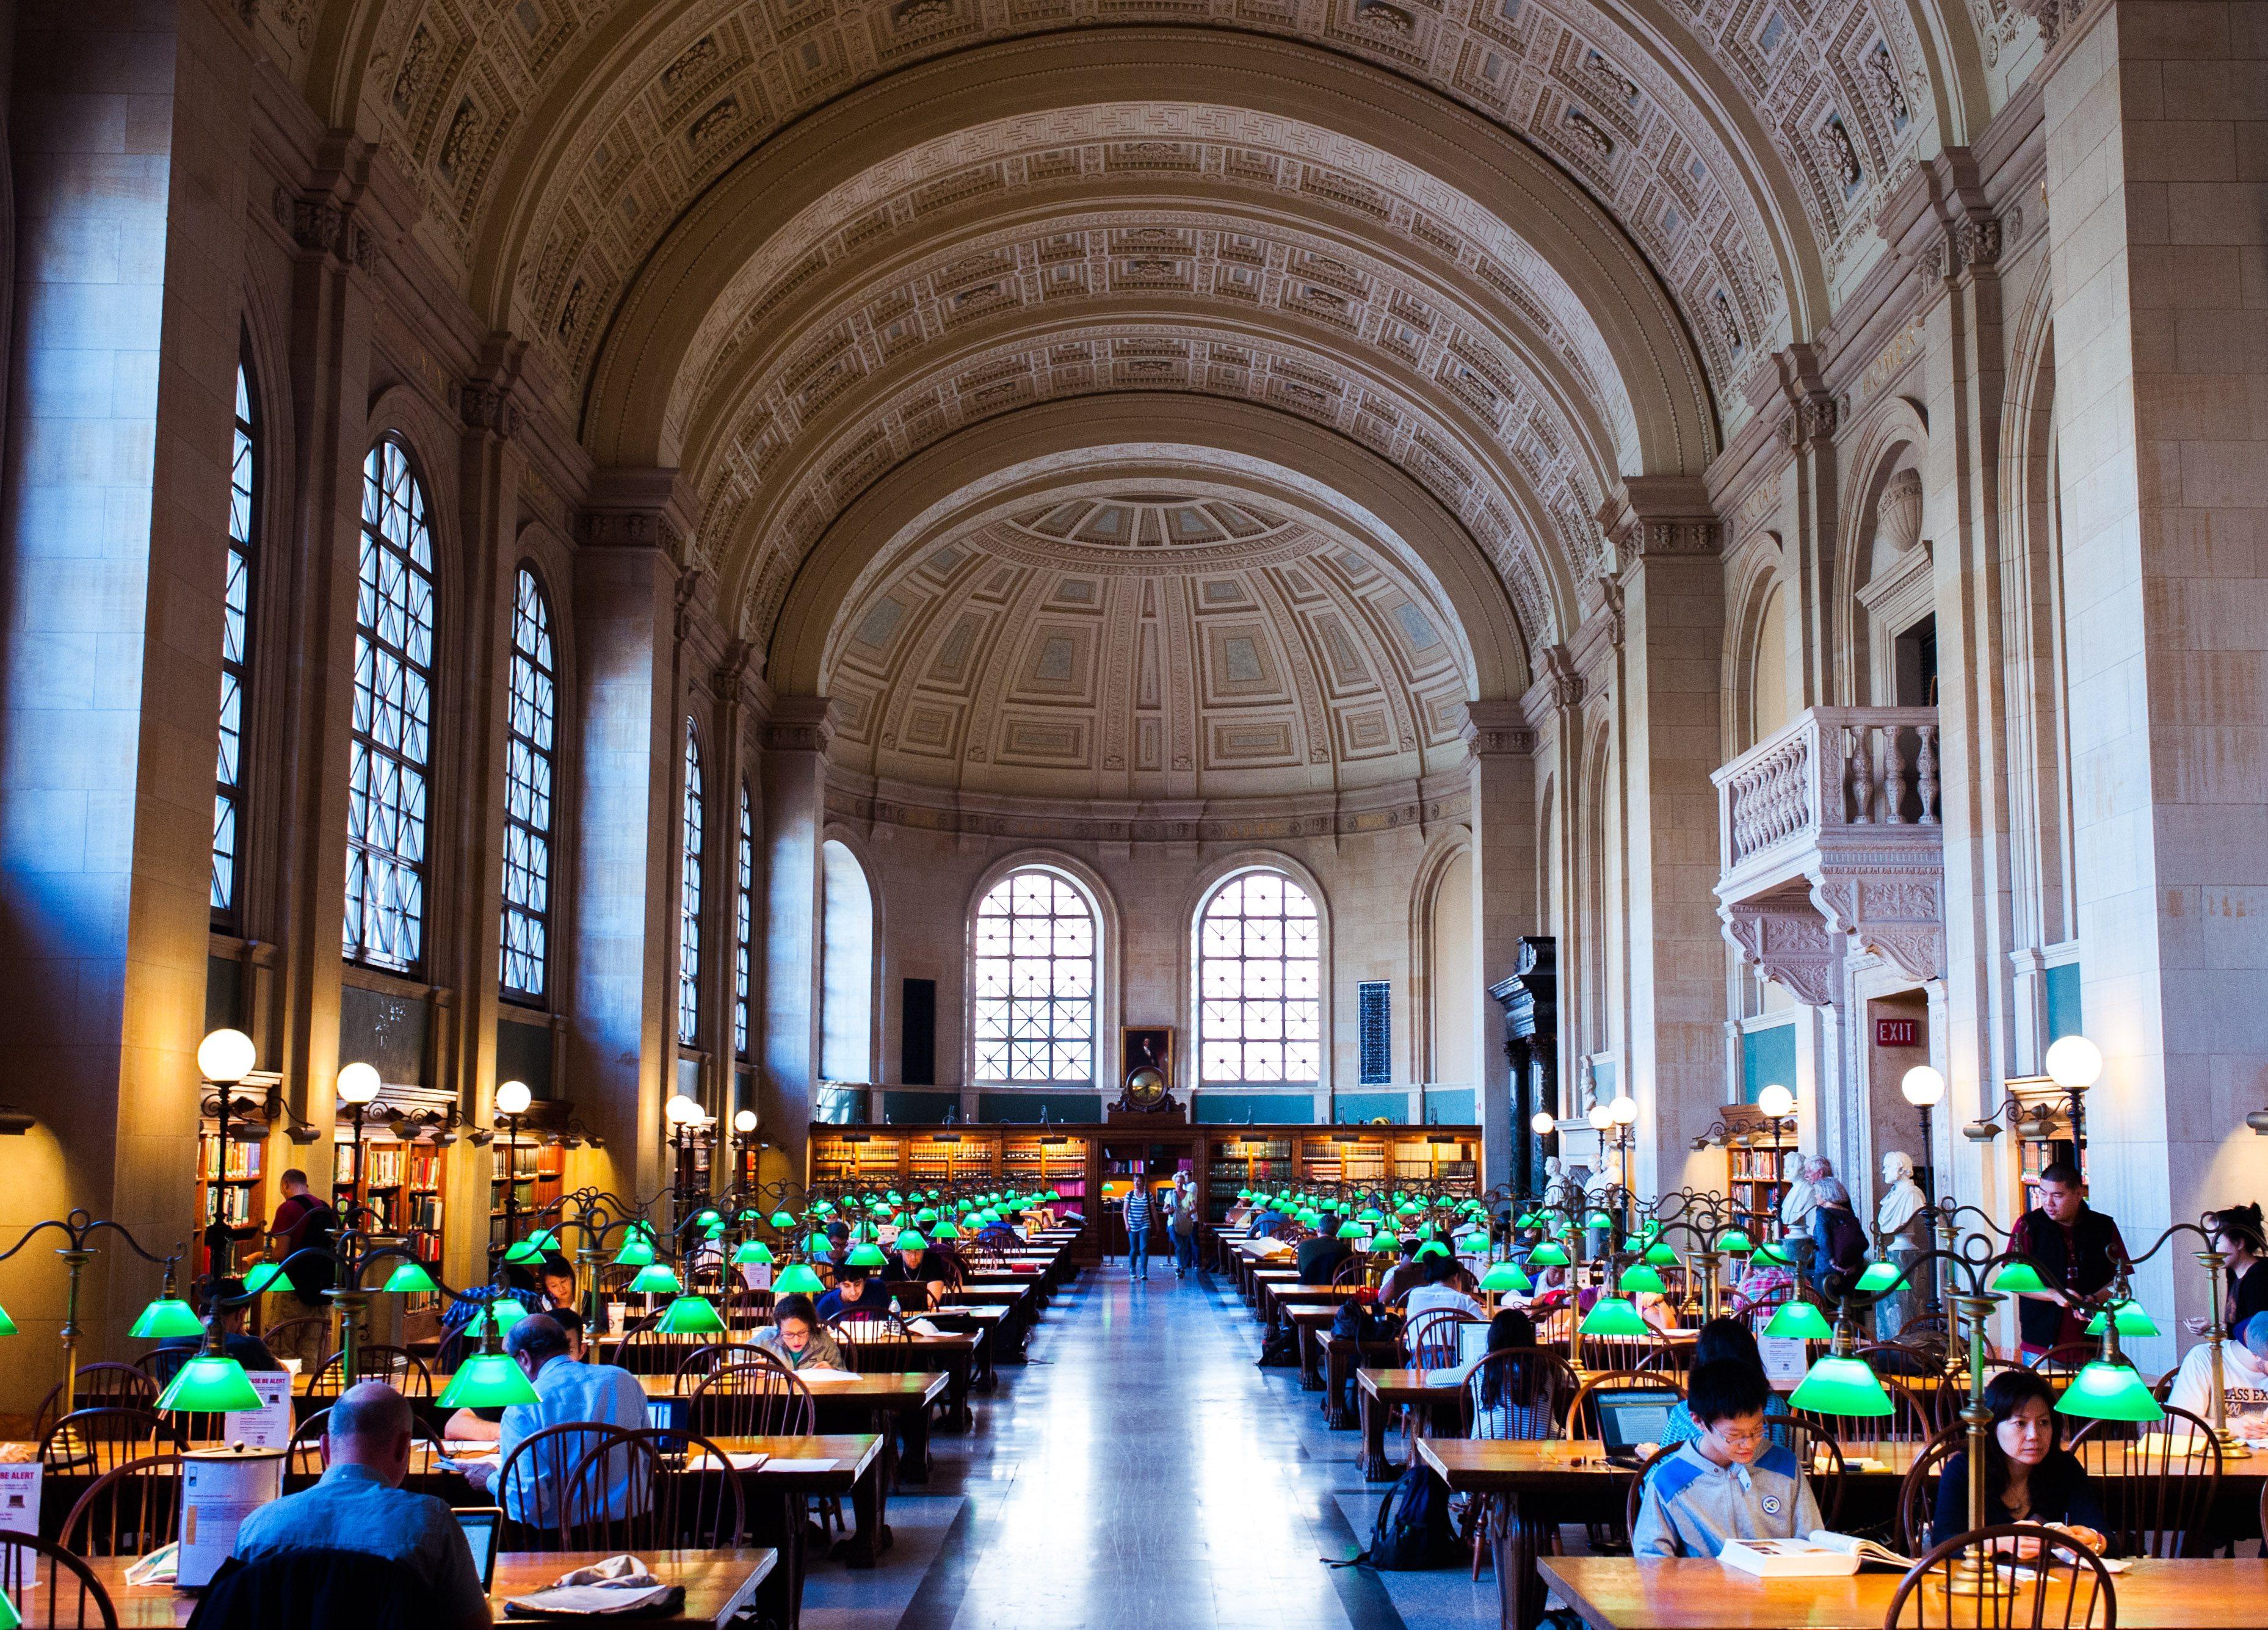 Boston_Public_Library_Reading_Room